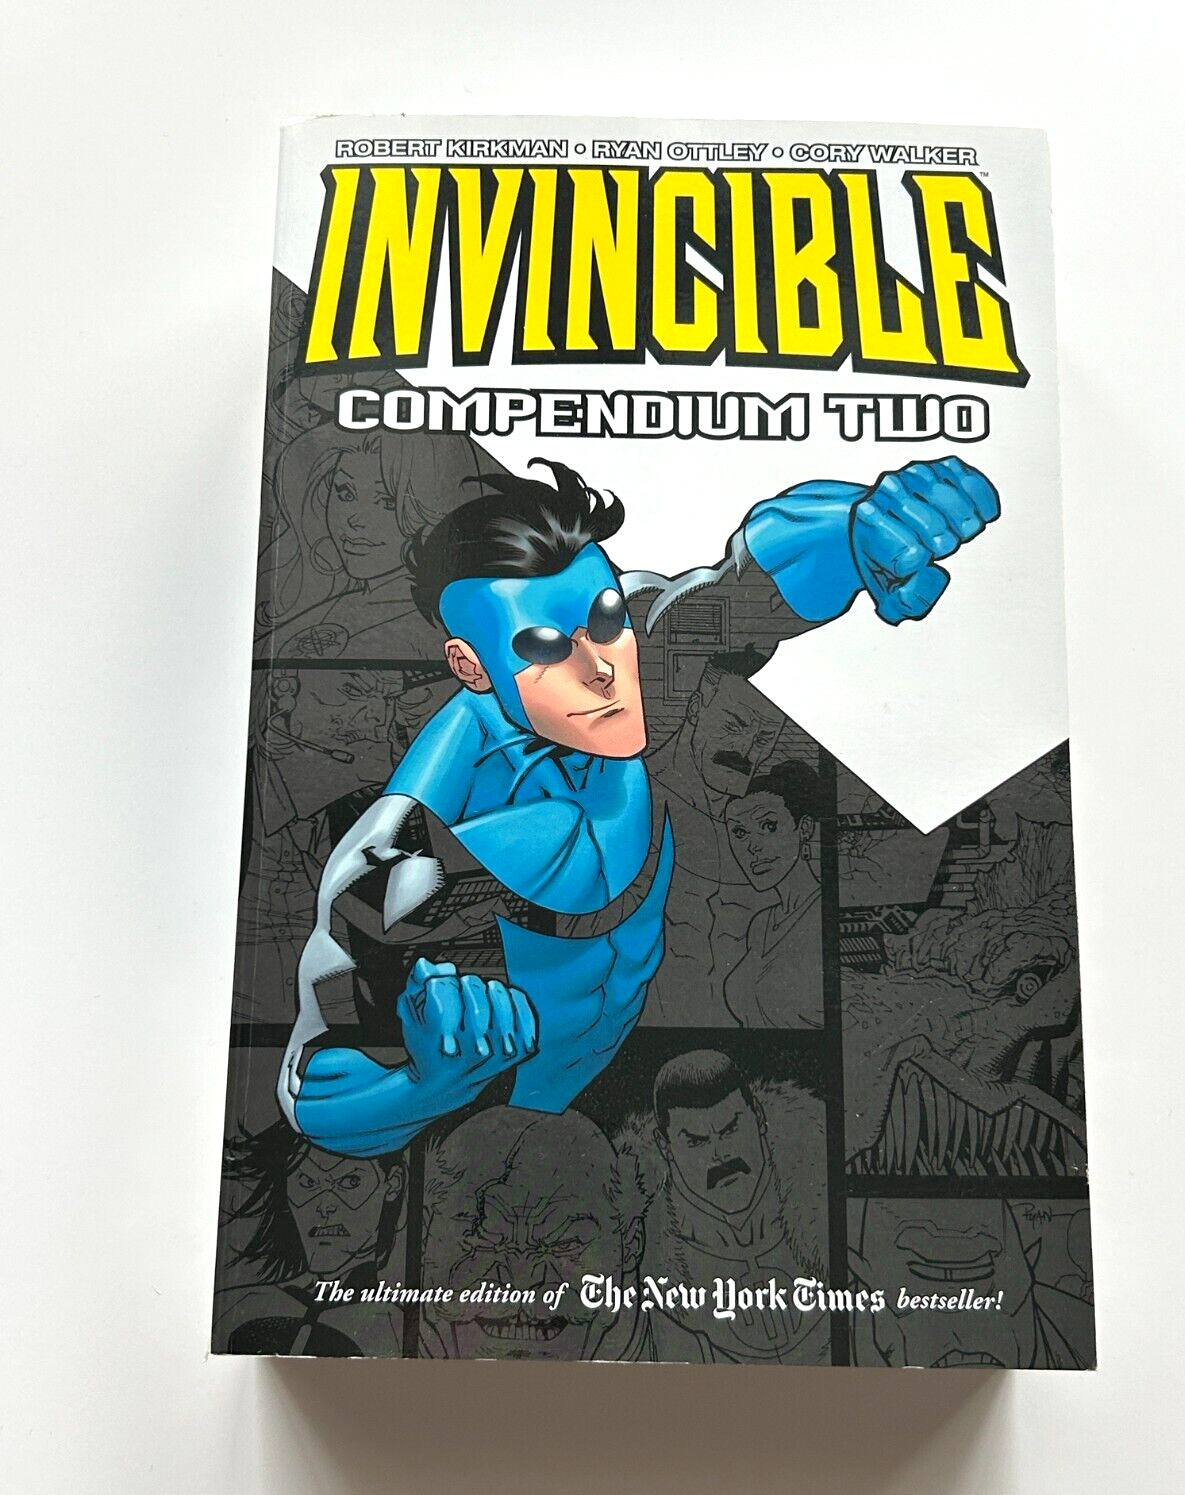 Invincible Compendium Volume 2 Paperback Image Comics Robert Kirkman